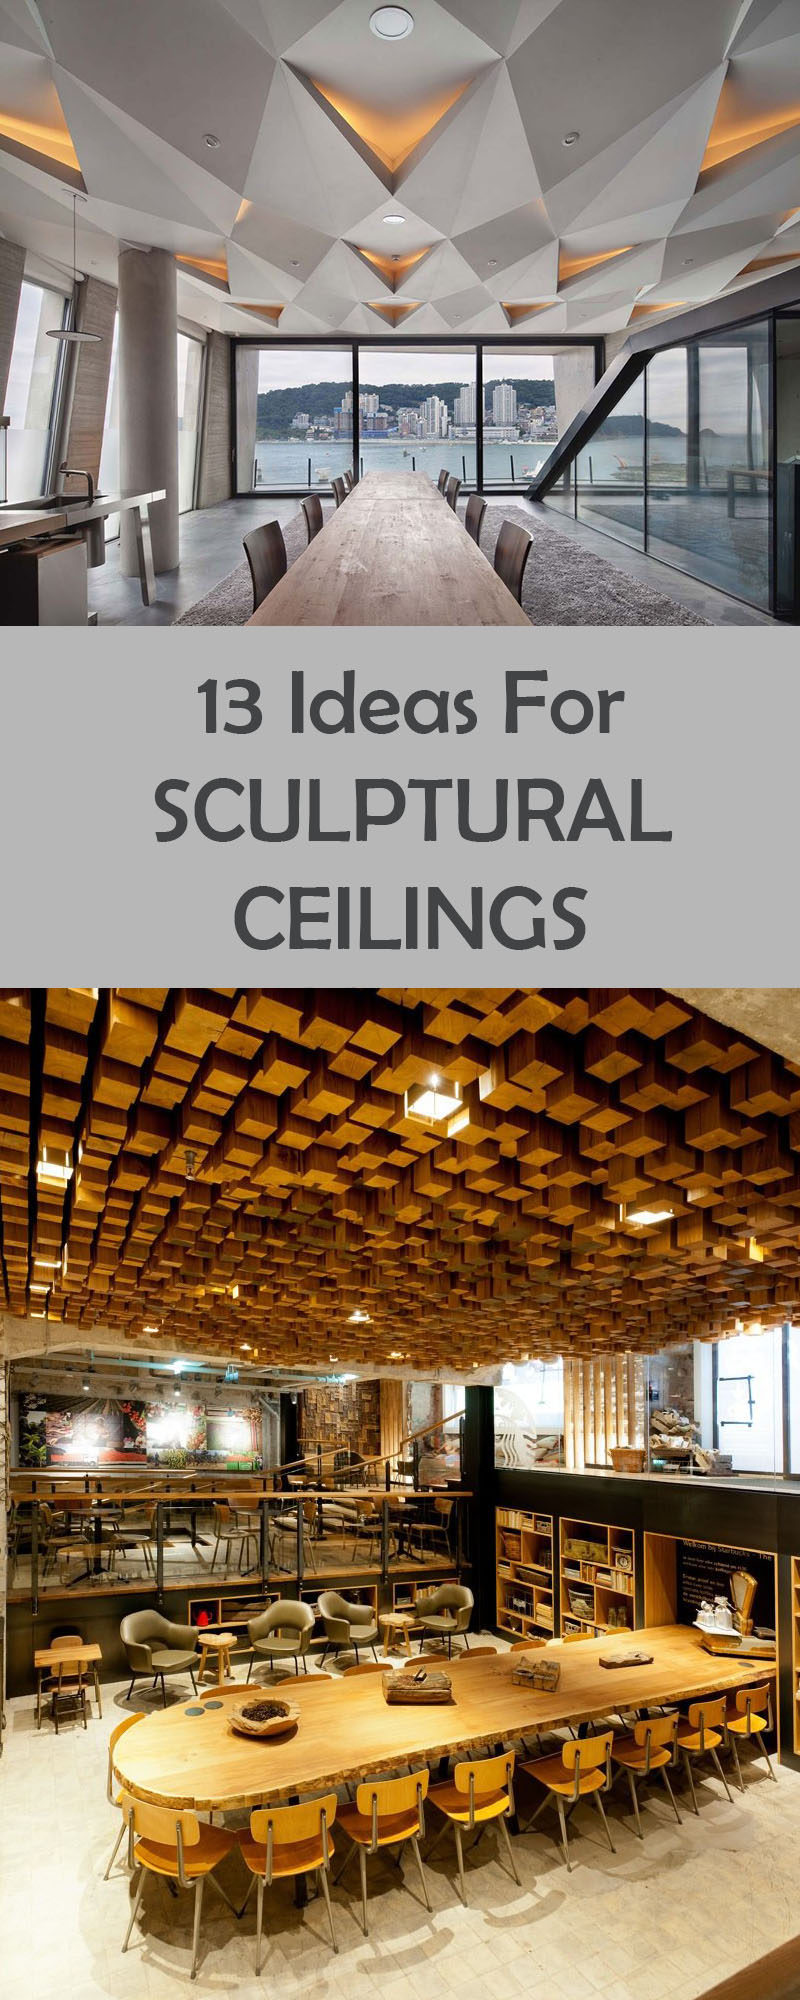 13 Ideas For Sculptural Ceilings